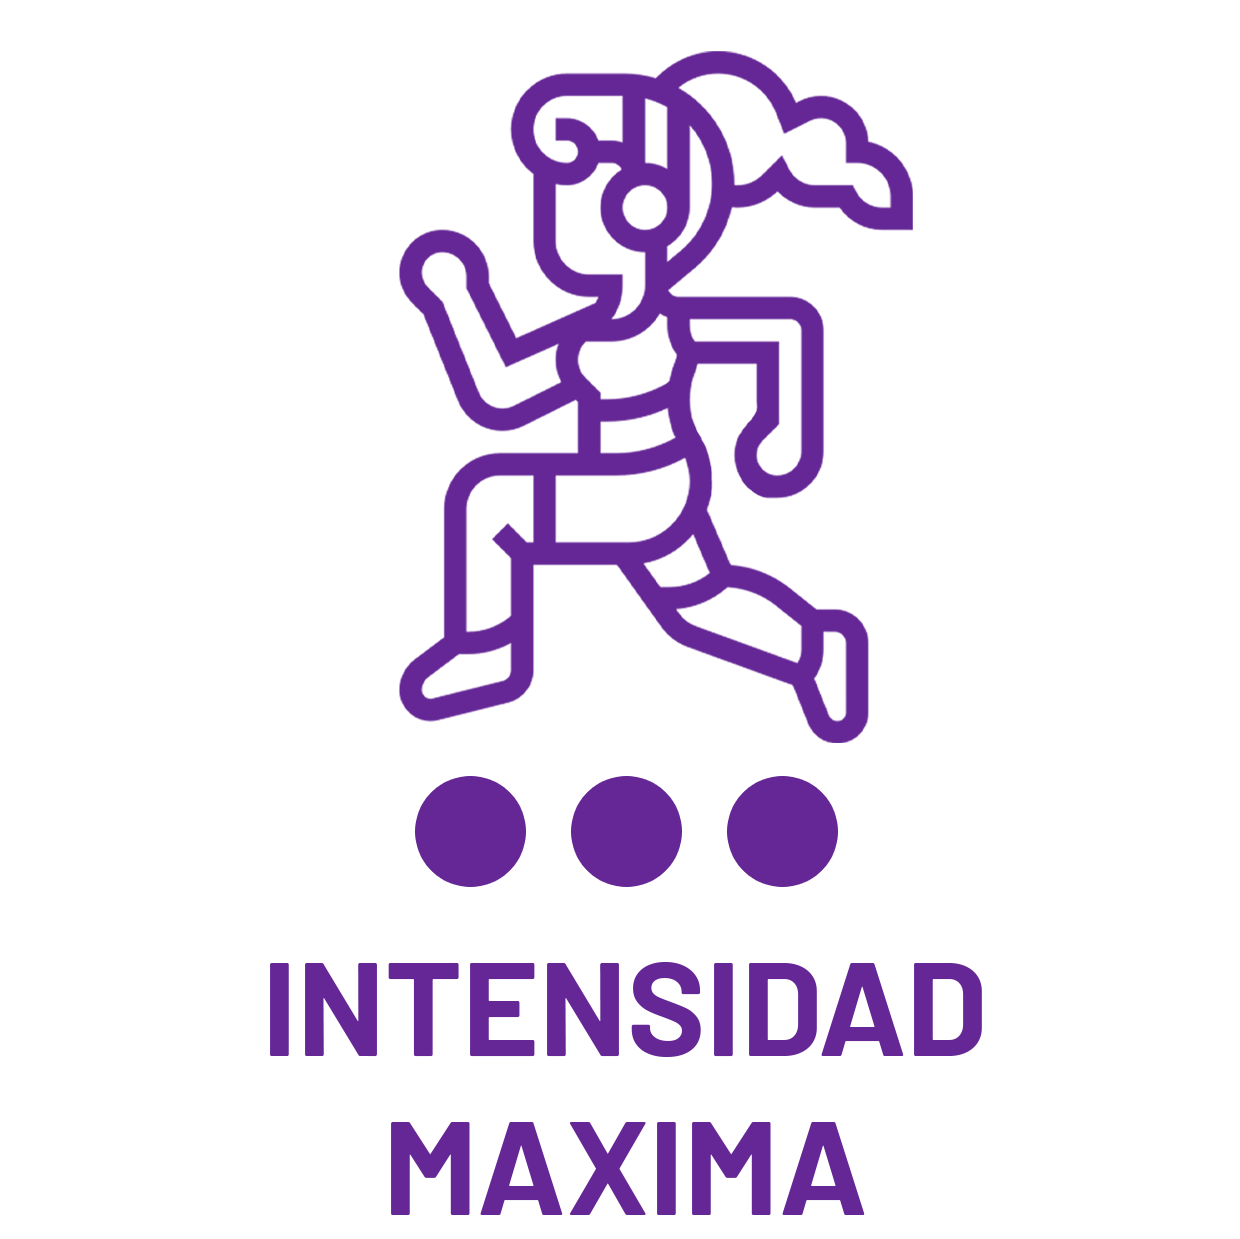 intensidad maxima